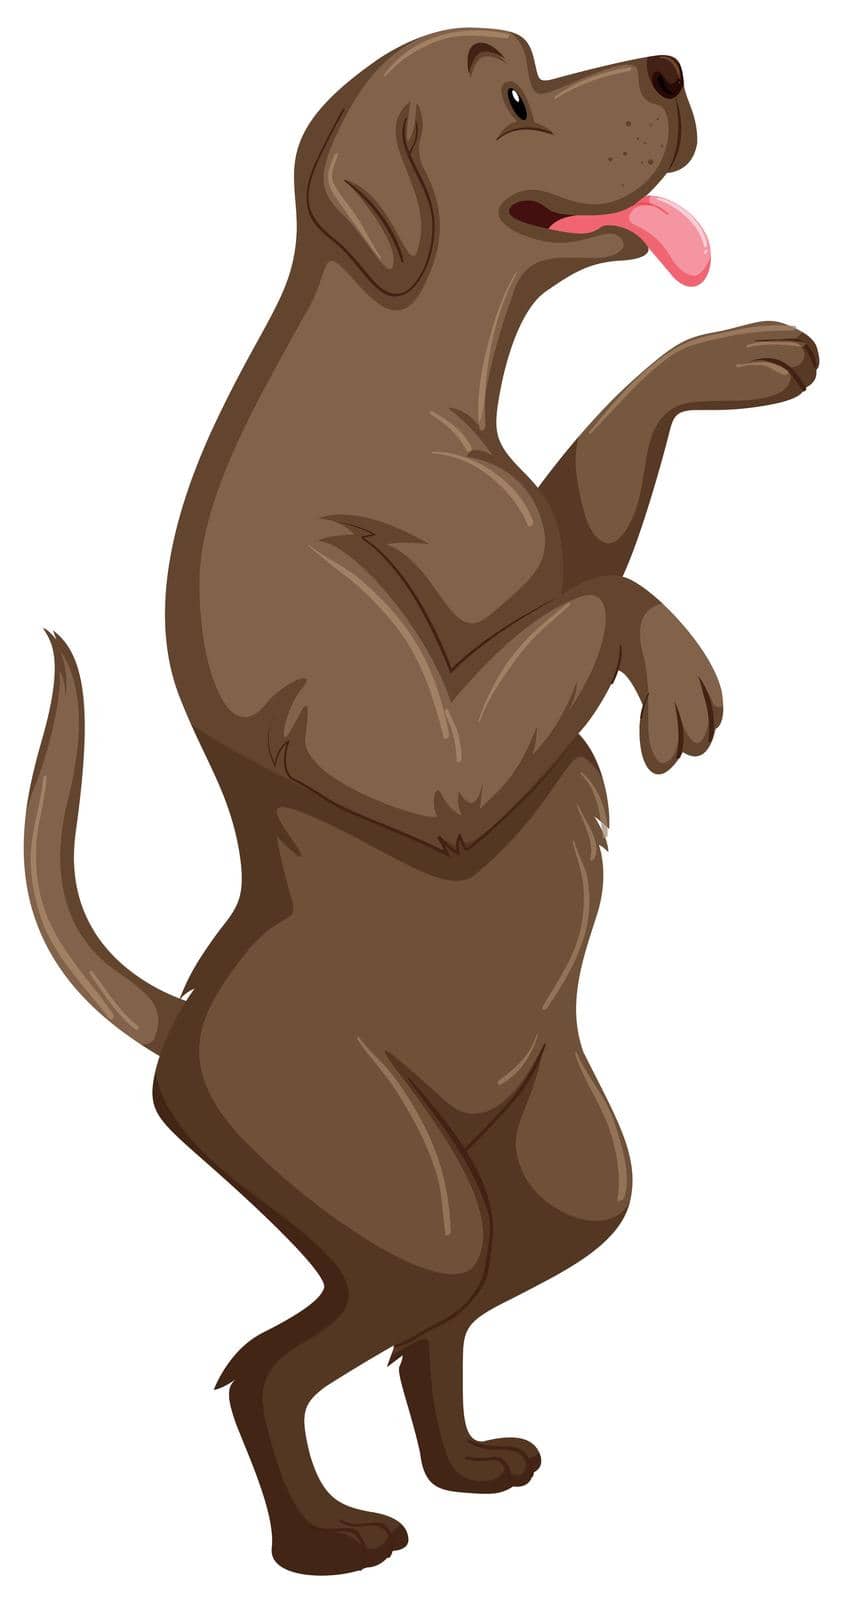 Little dog with gray fur illustration